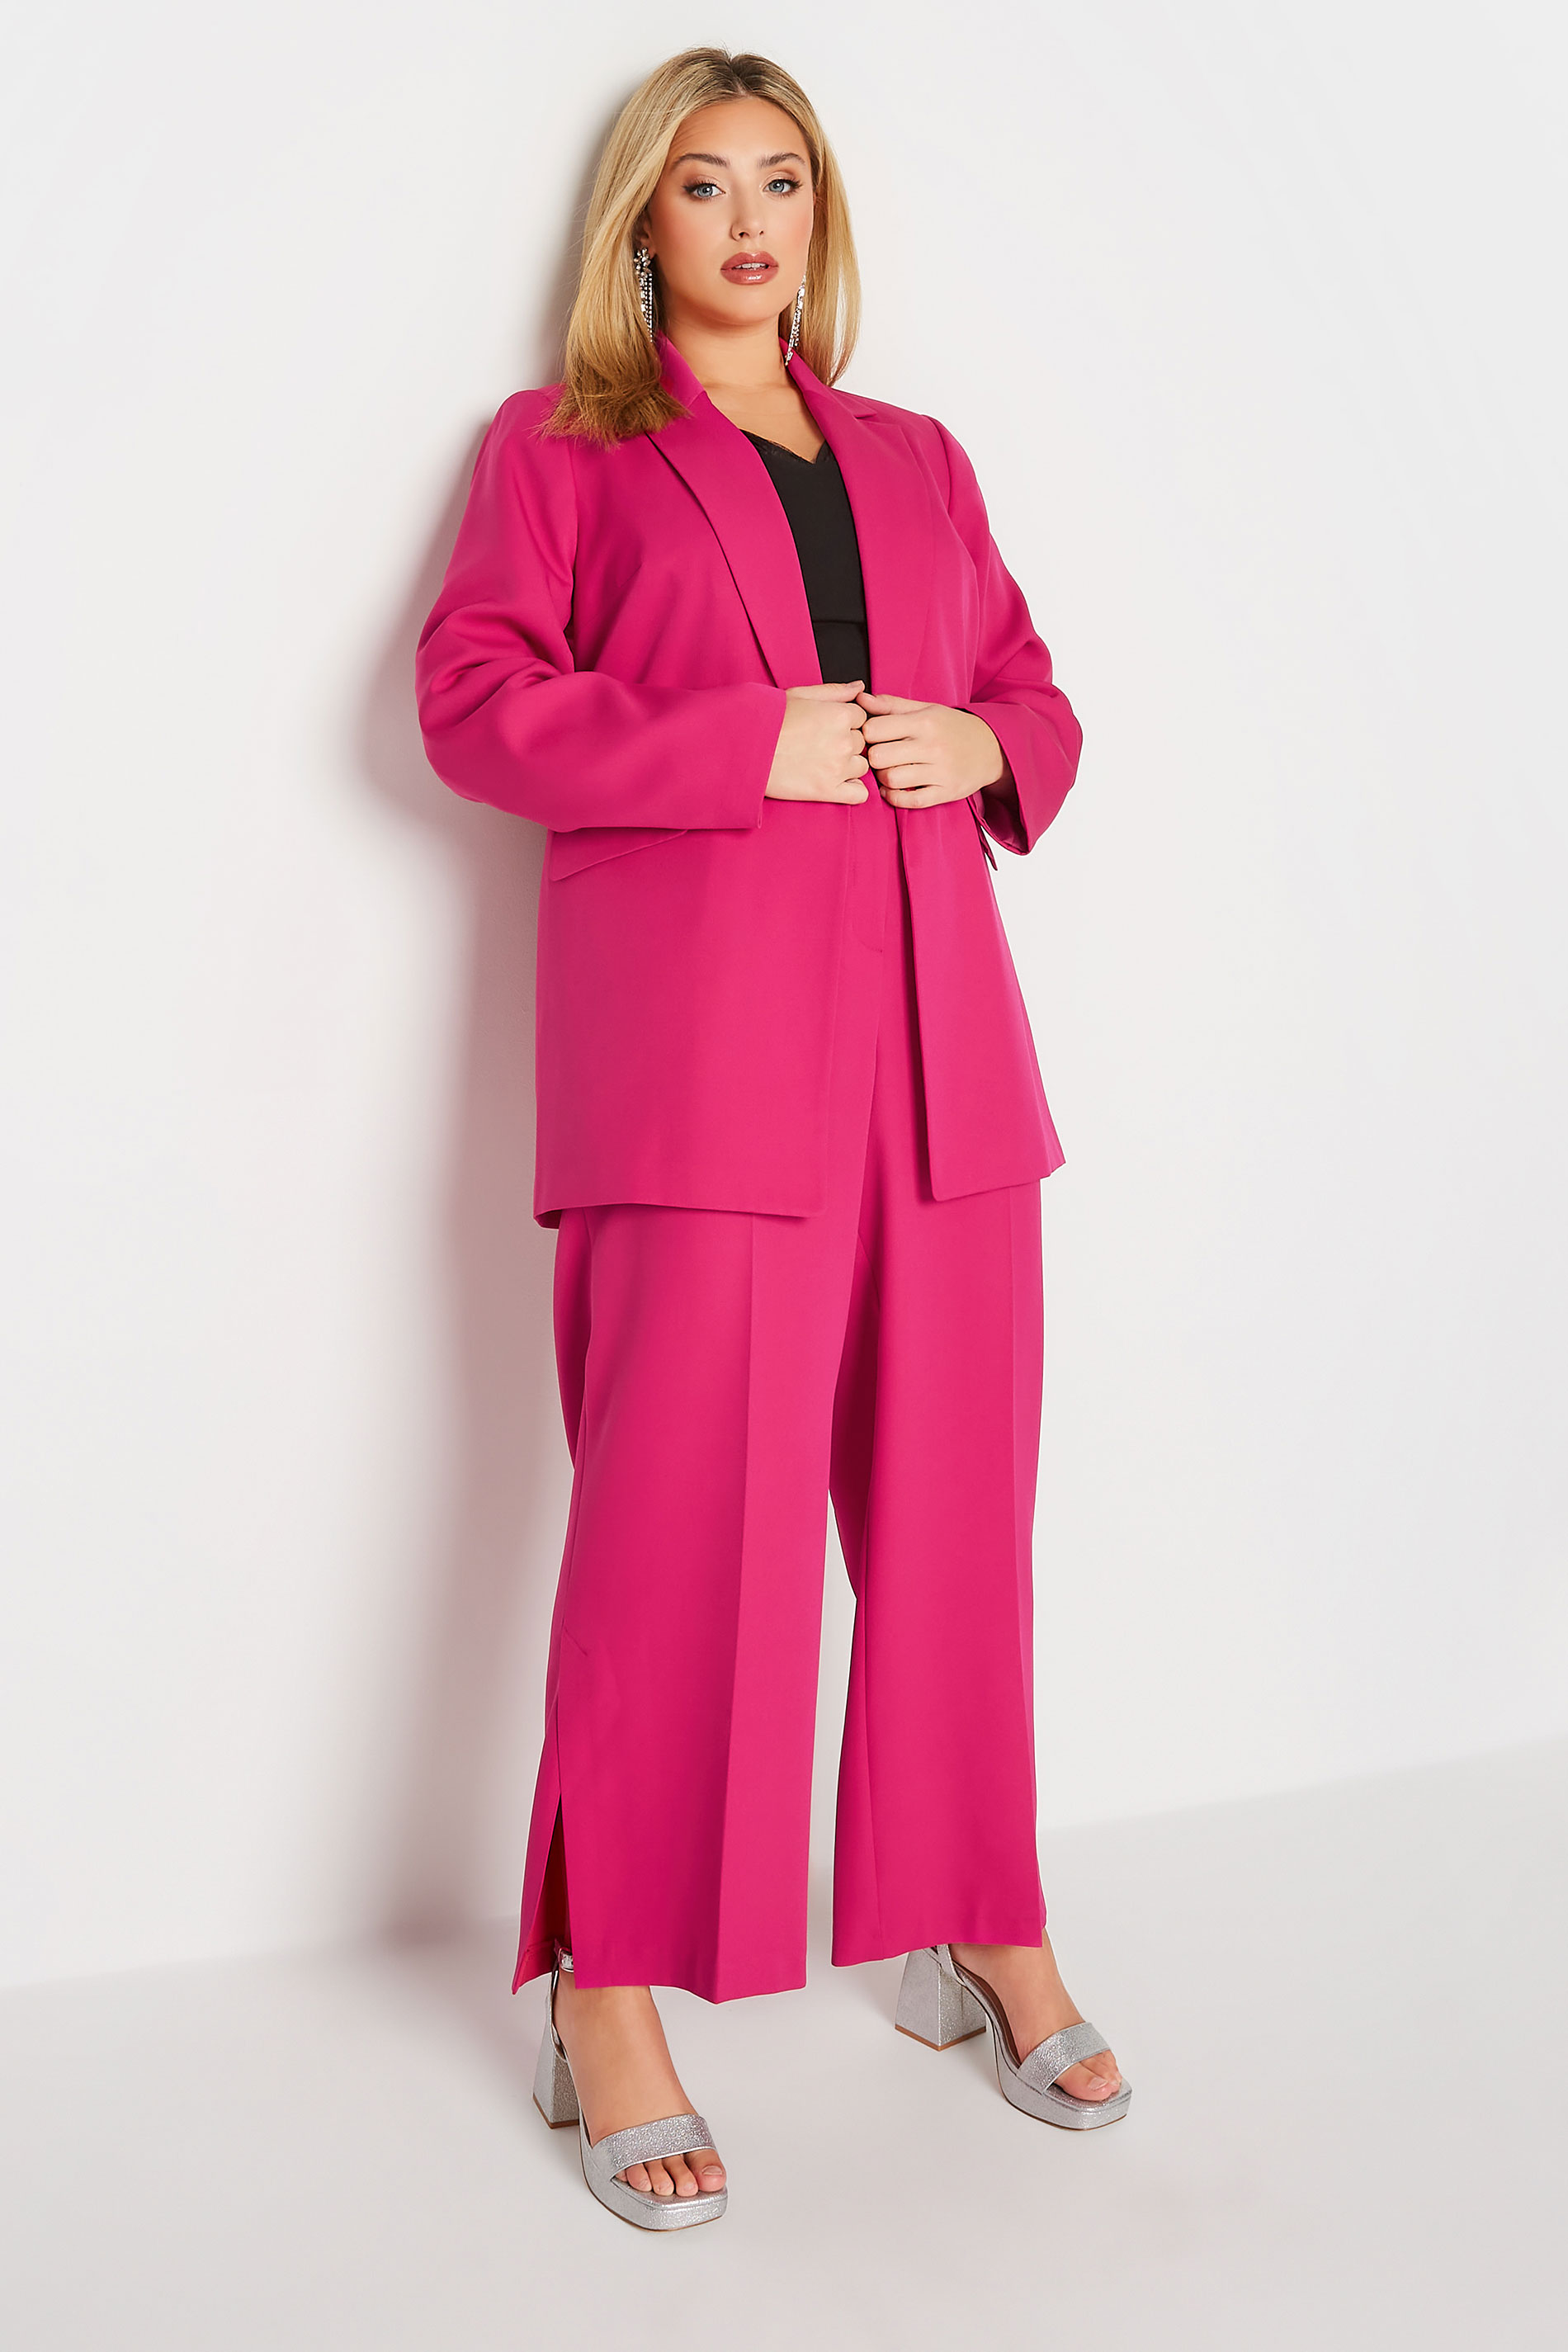 Pink Plus-Size Blazers, Suits & Separates